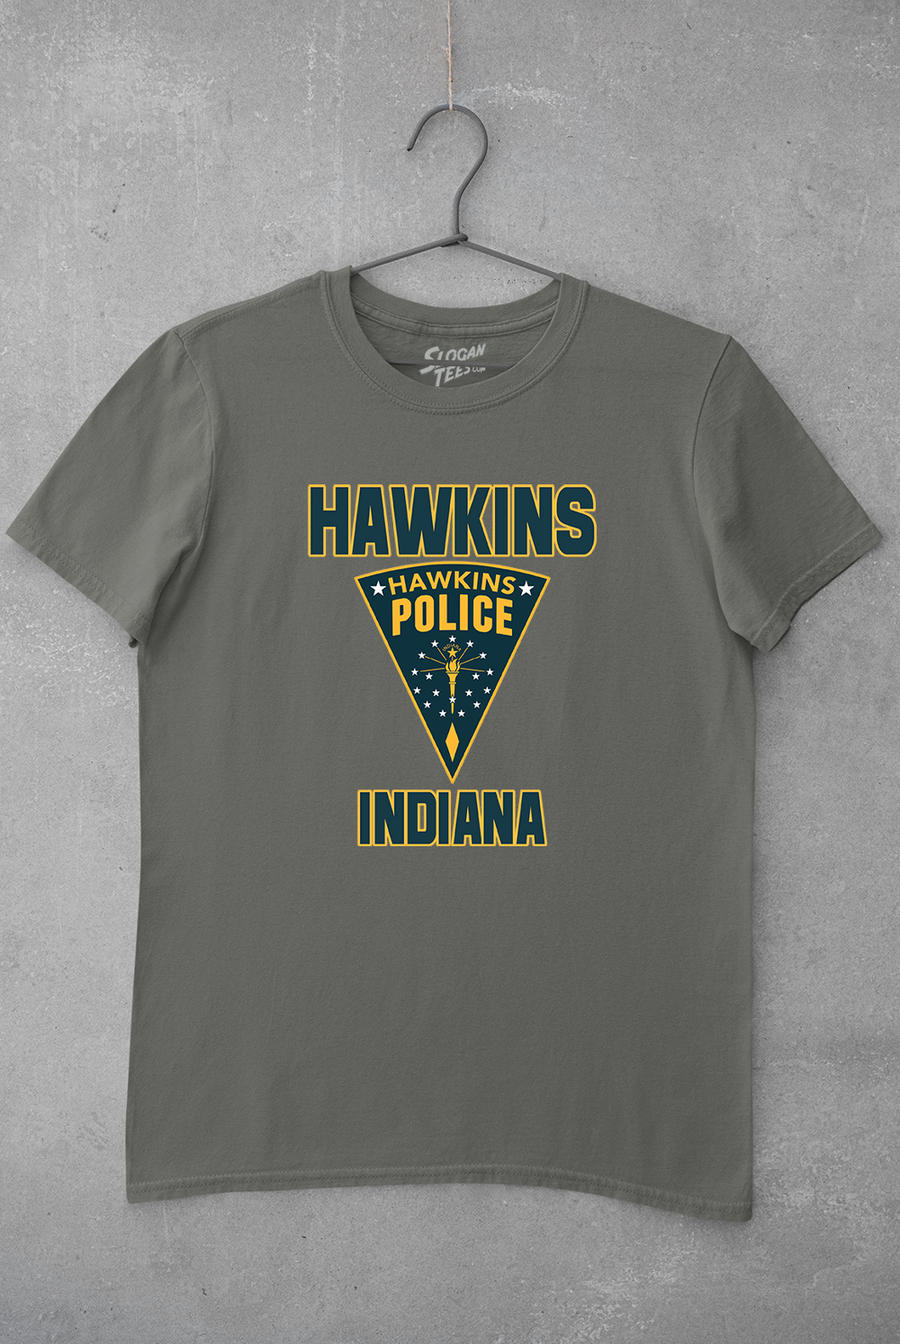 Hawkins Police Dept.